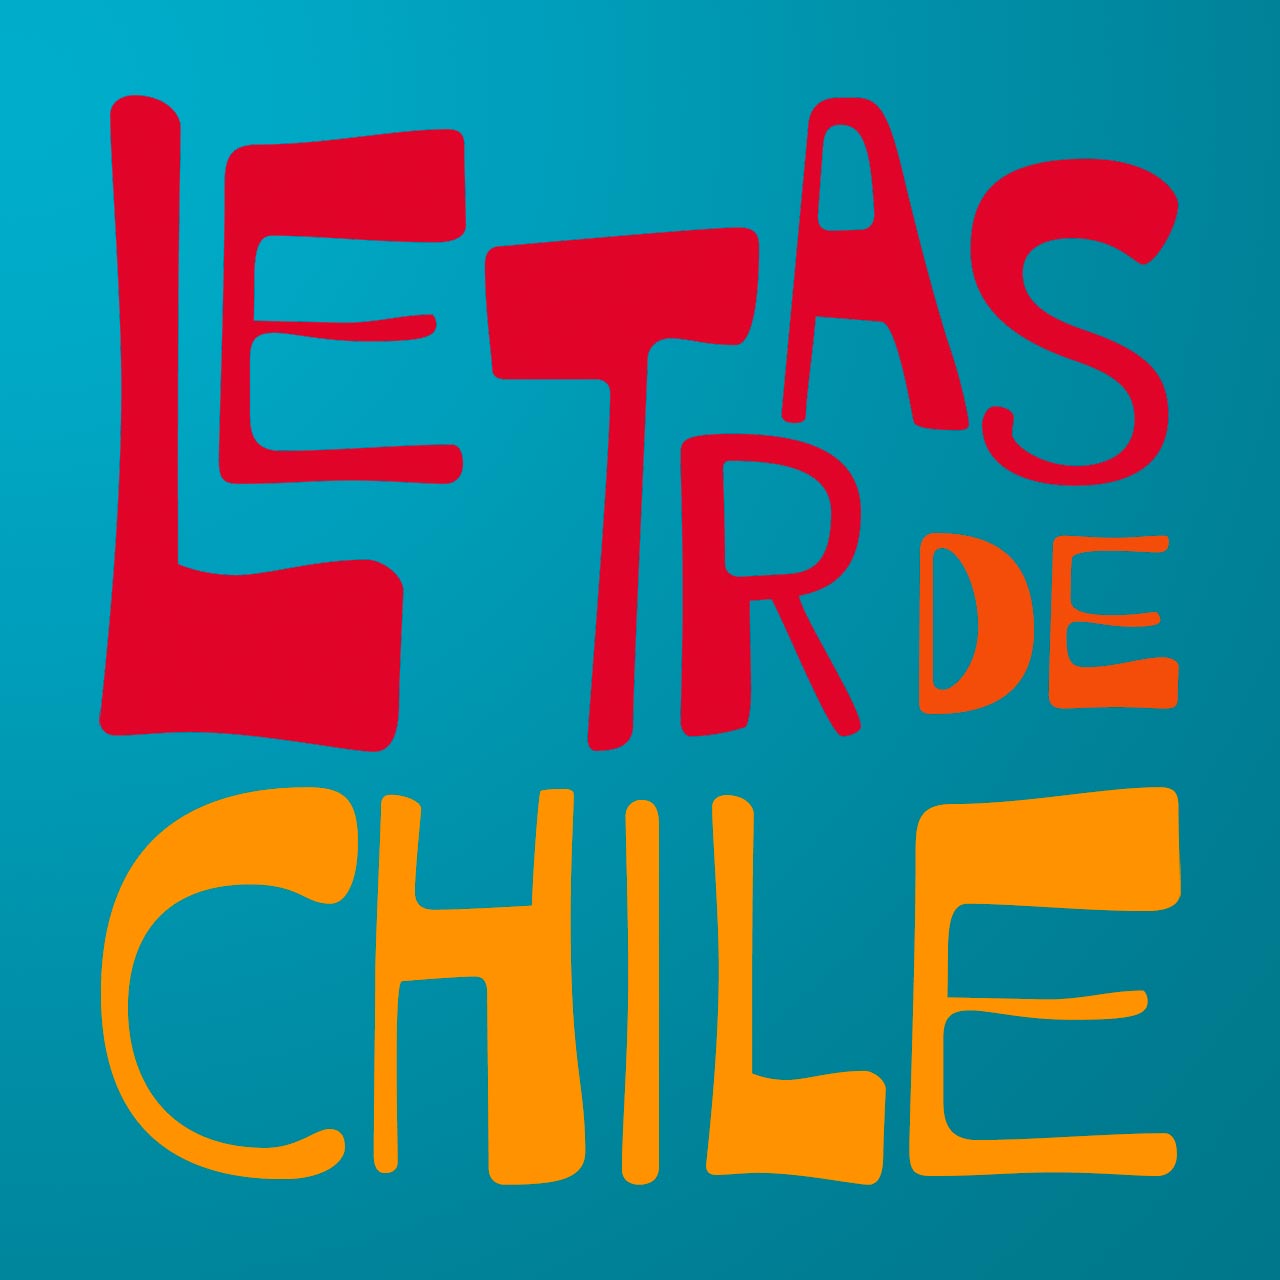 Logo Letras de Chile